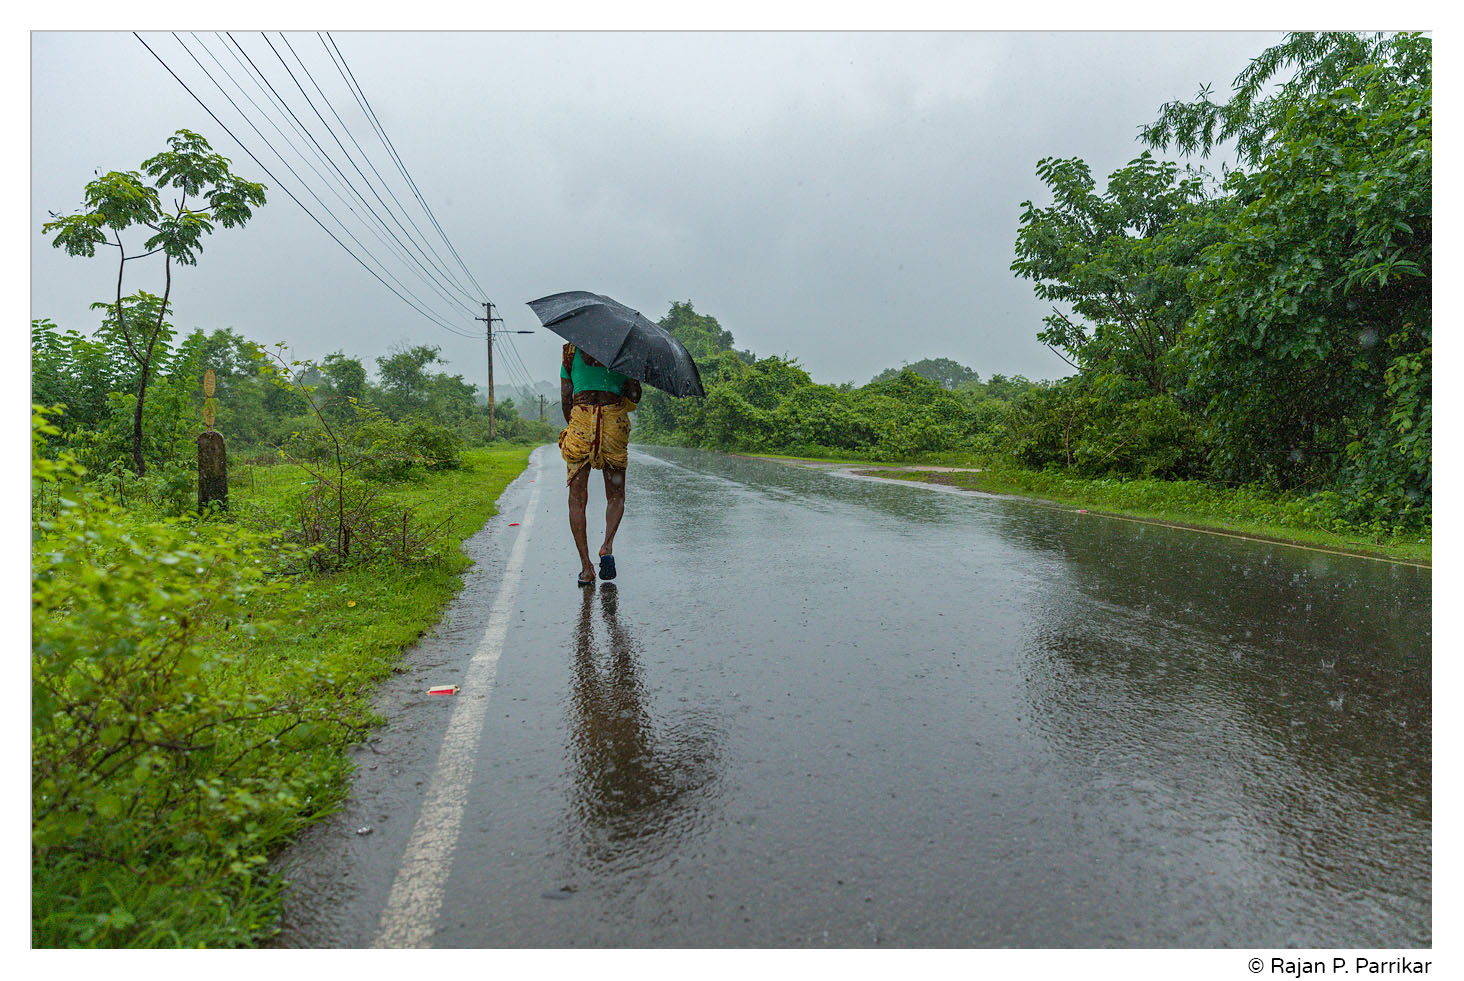 Rainy in Khandola, Goa